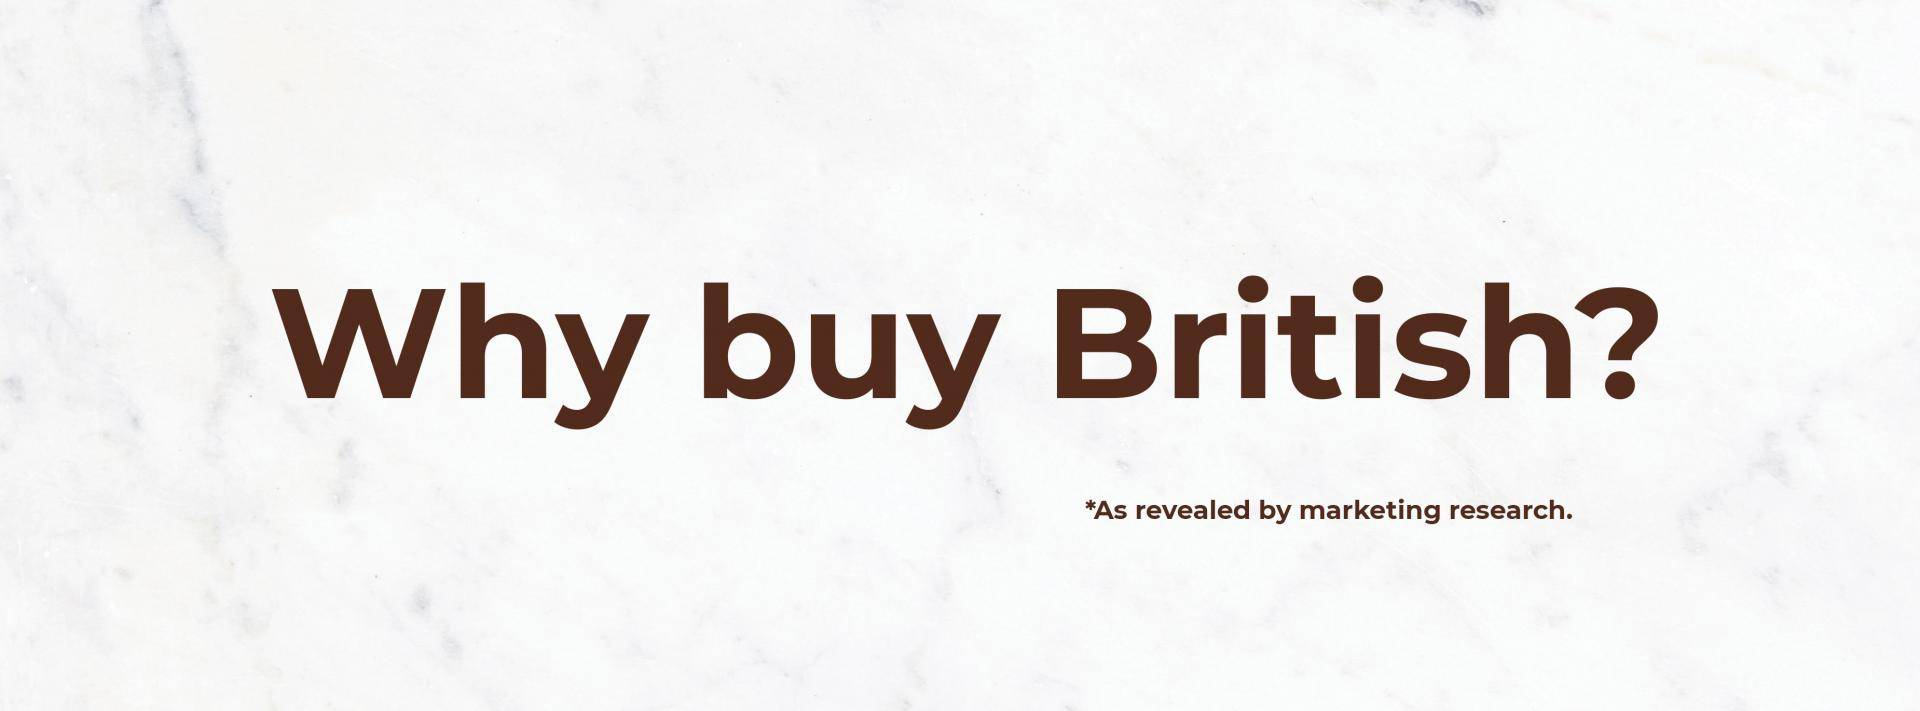 S&A buy British